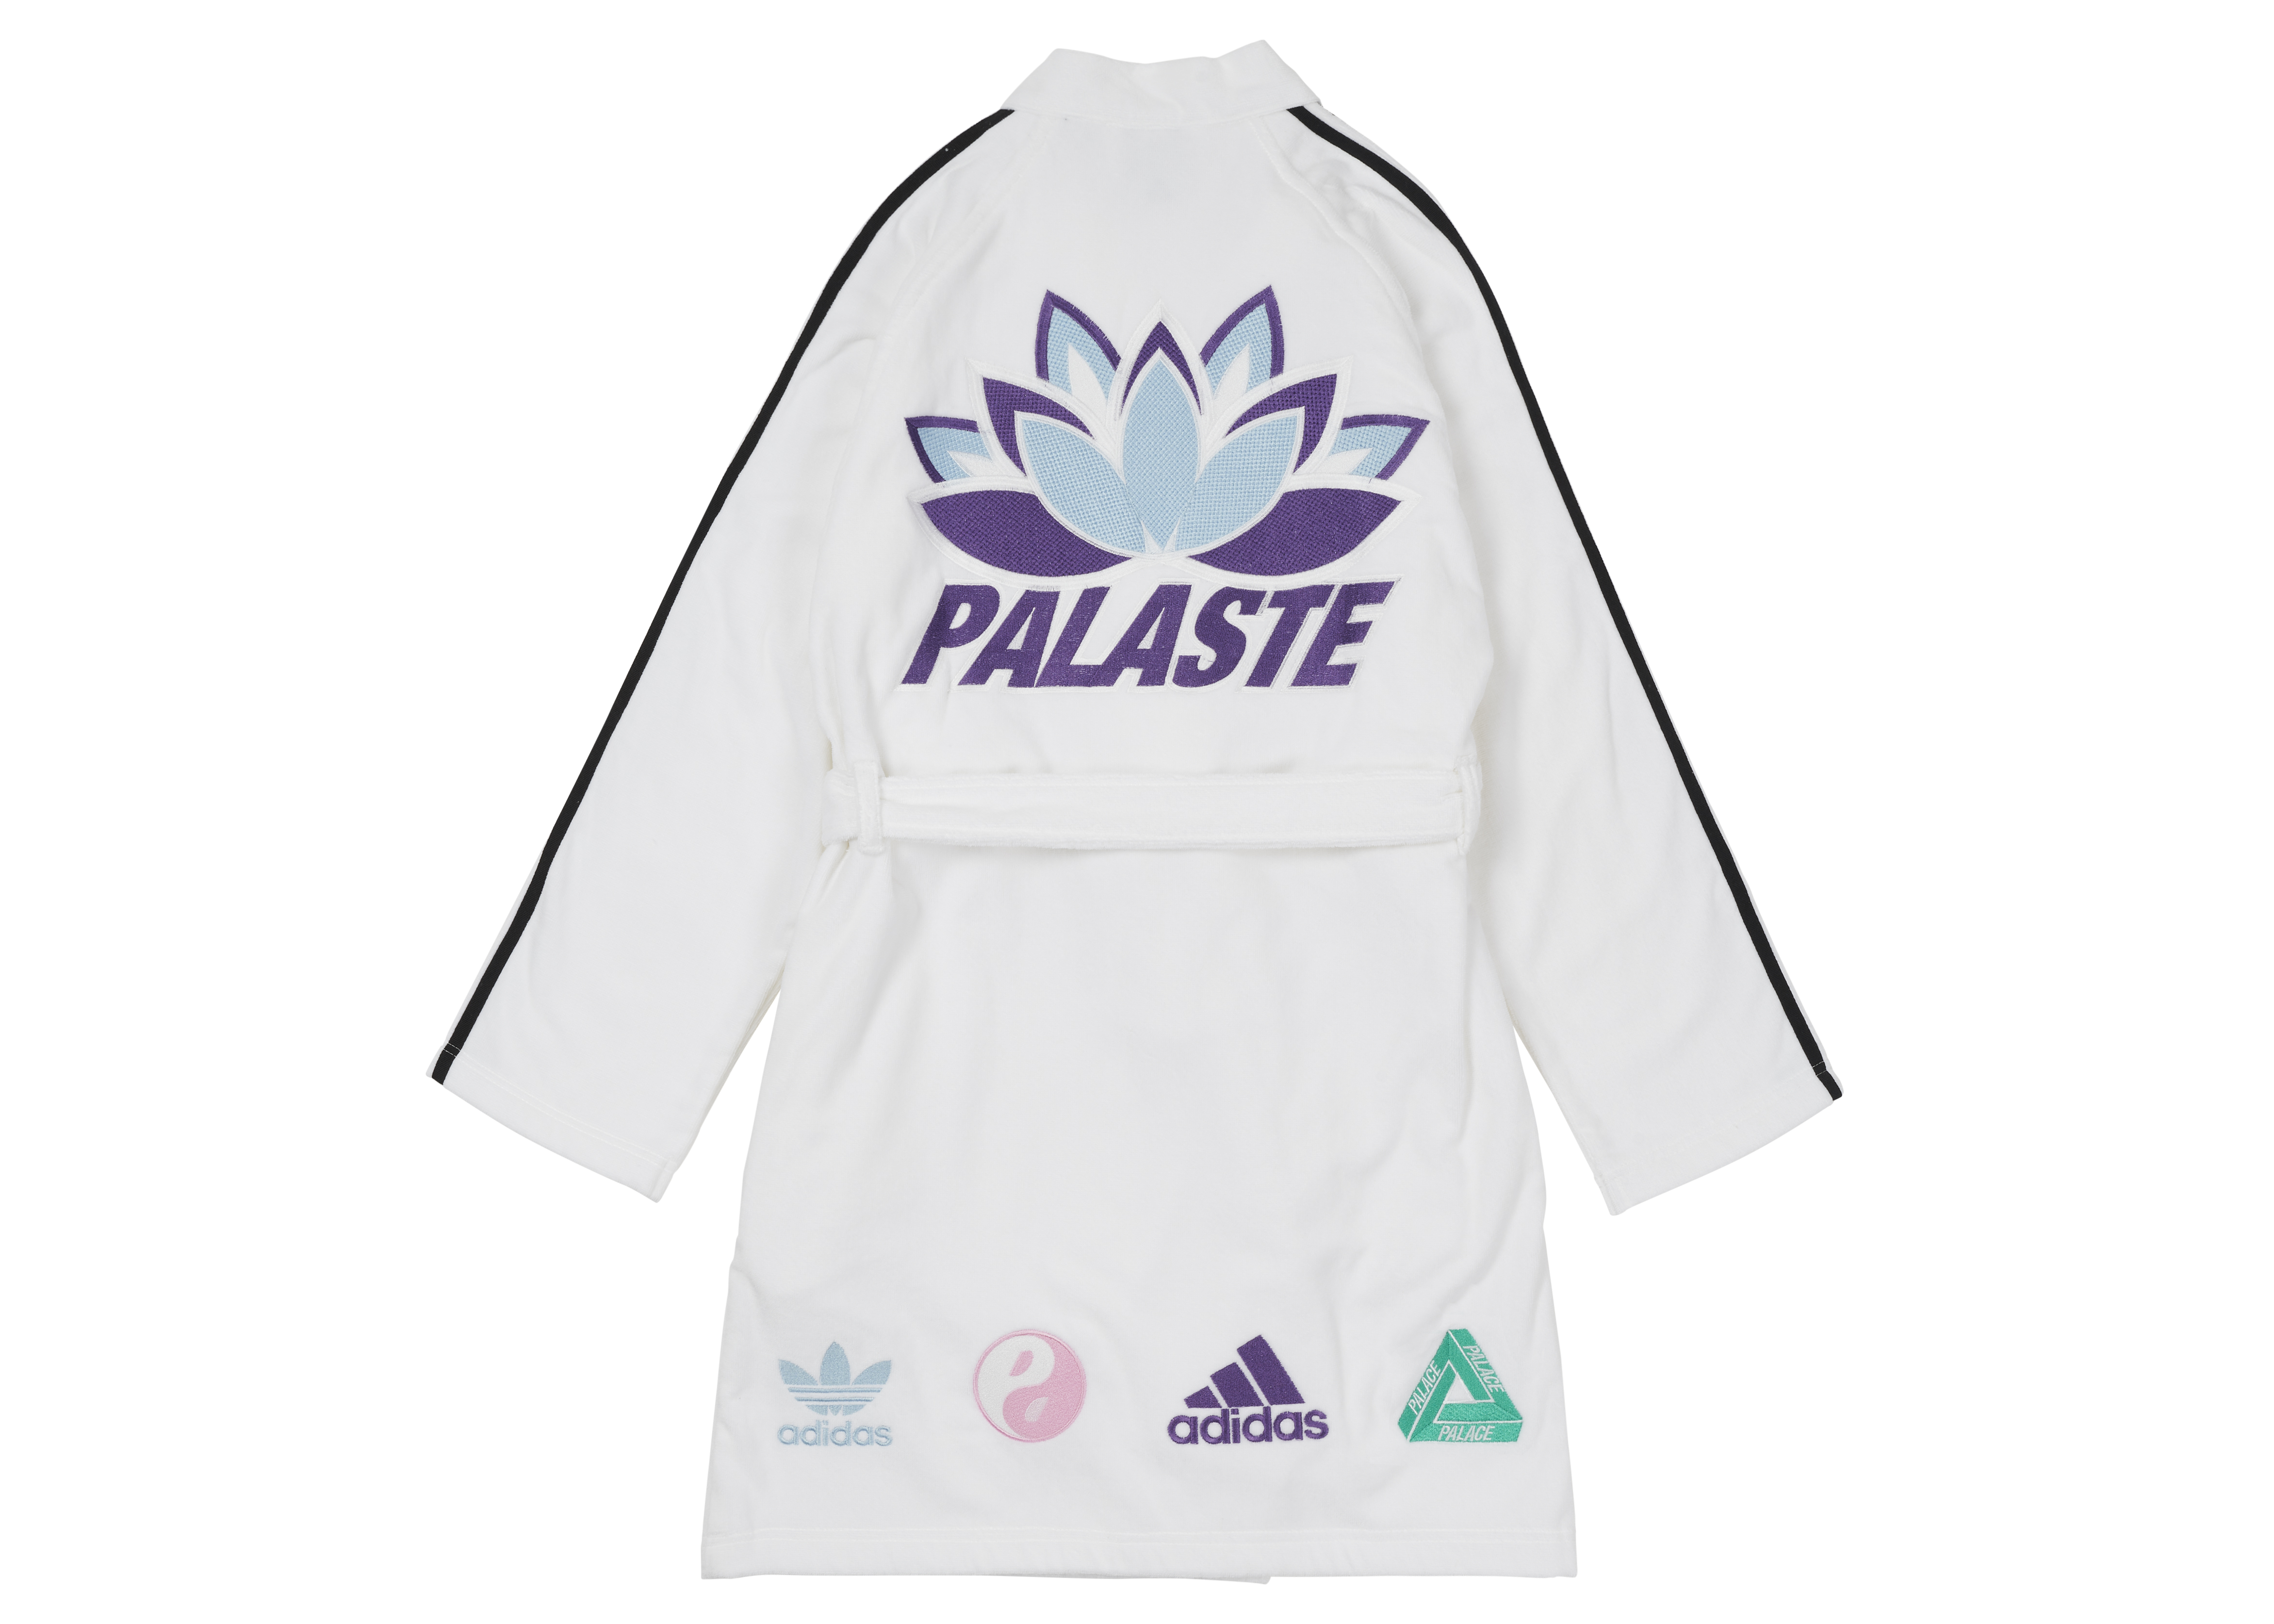 Palace x adidas Palaste Towel Robe White - FW21 メンズ - JP